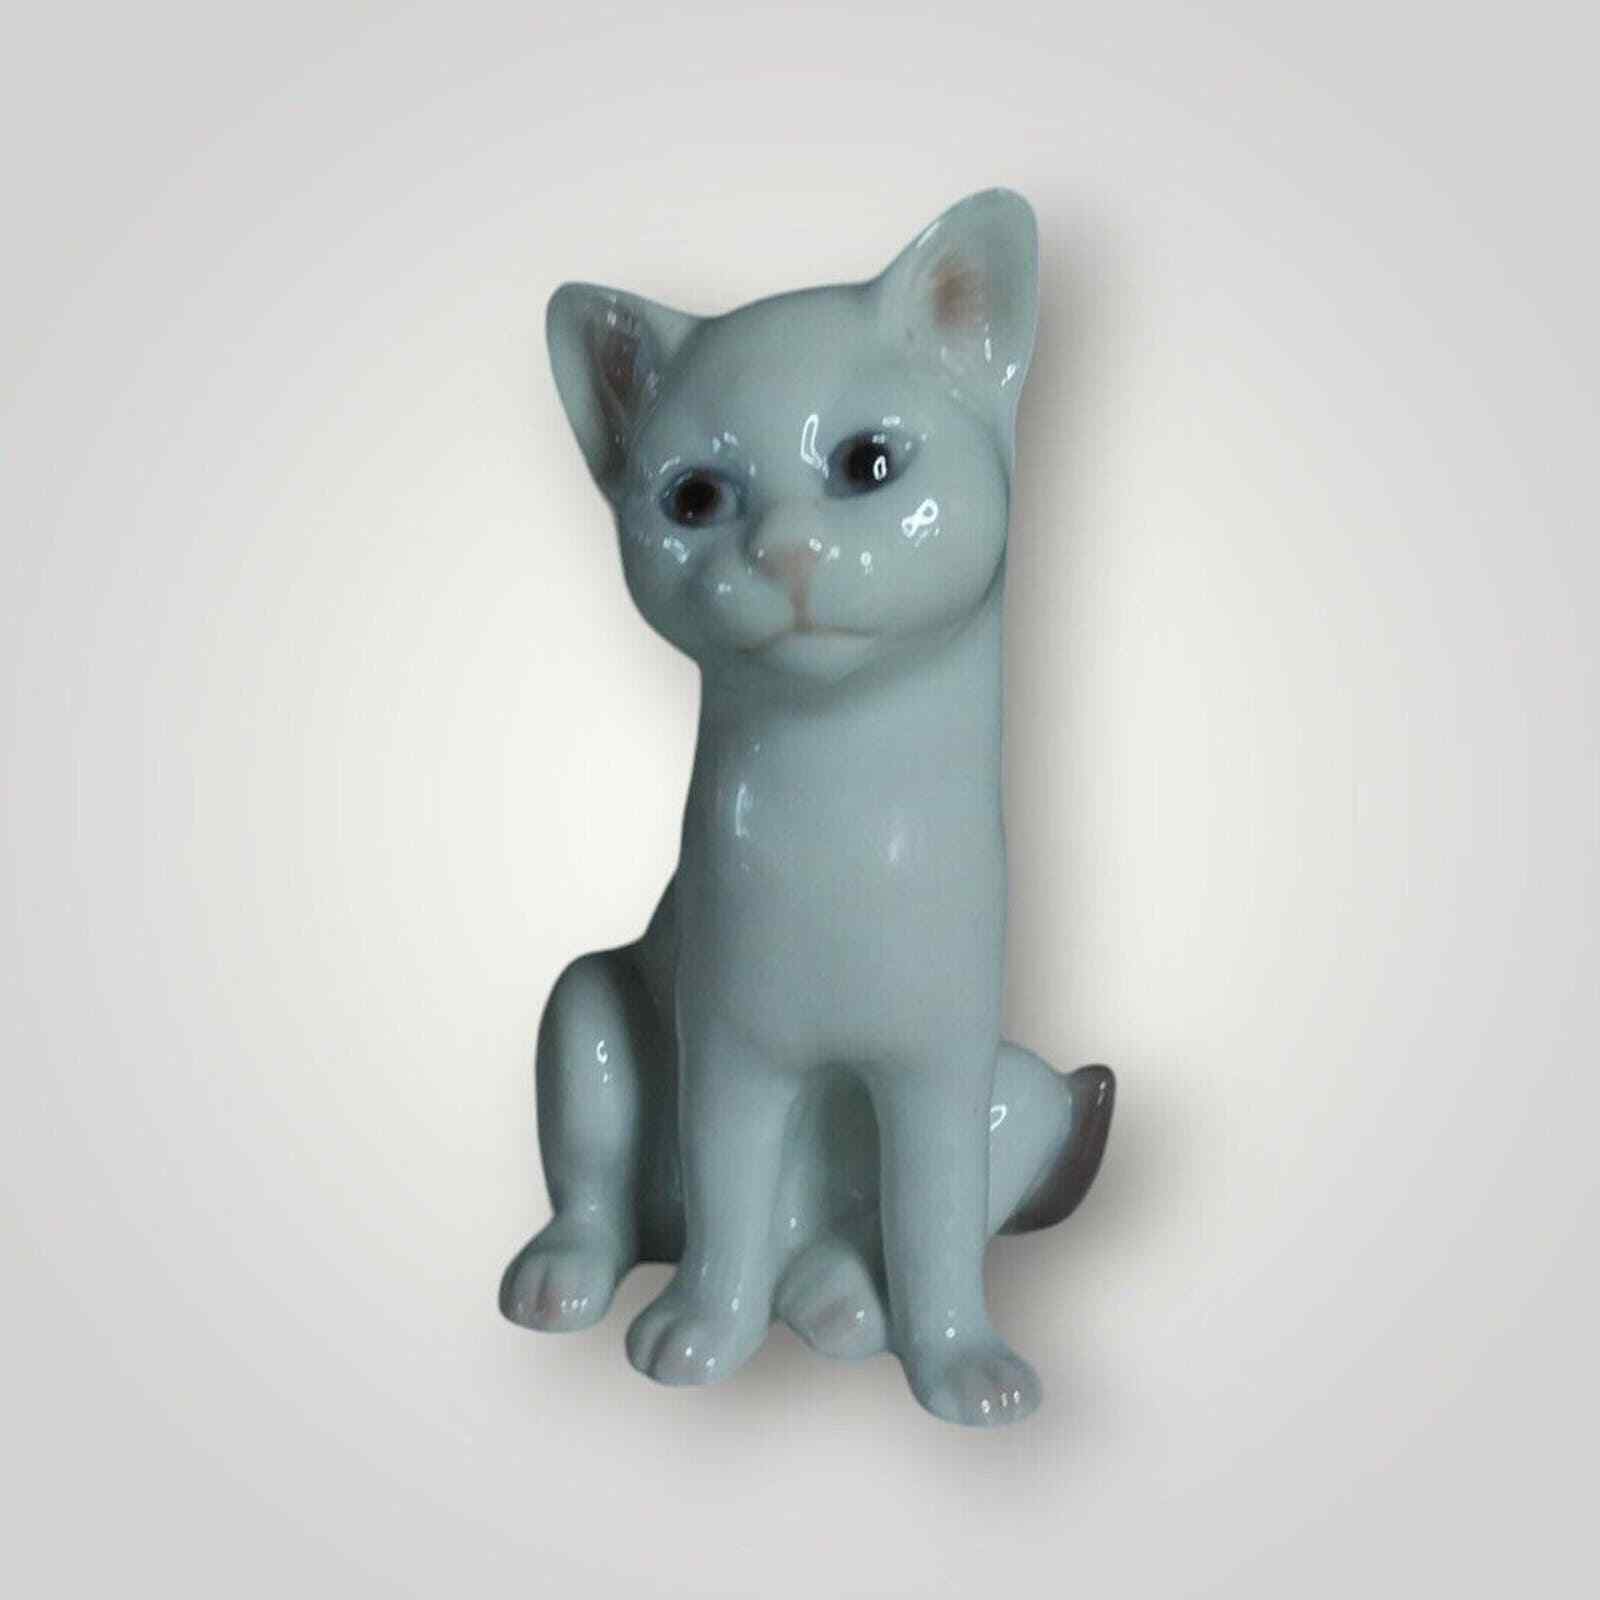 Vintage Signed Bing & Grondahl Porcelain Sitting Cat Figurine B&G Denmark #2505